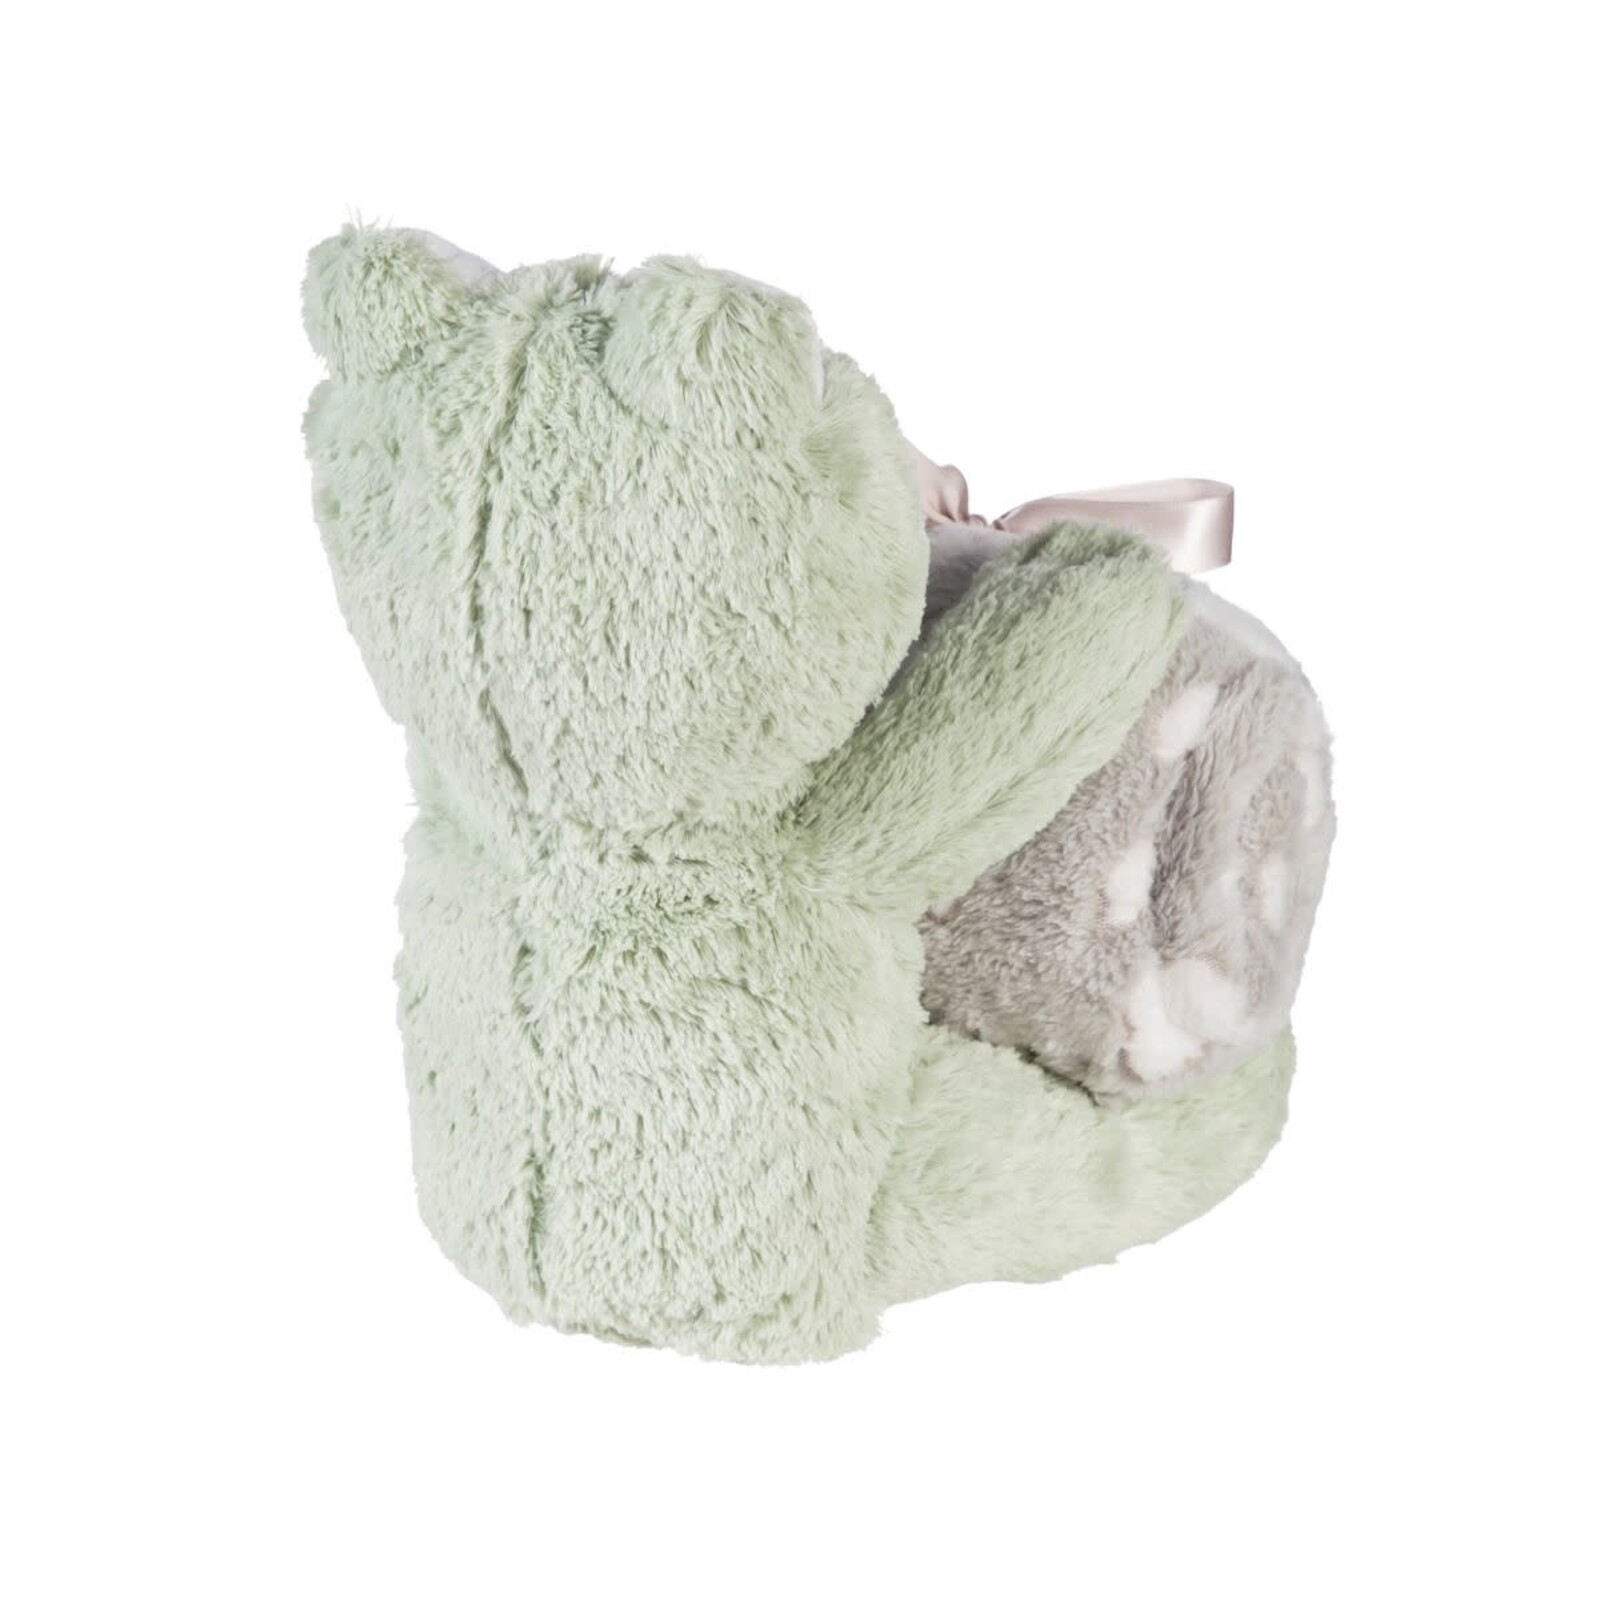 b. Boutique Cuddly Frog 10" Stuffed Animal w/ Blanket Gift Set, Green 7PLSH717 loading=